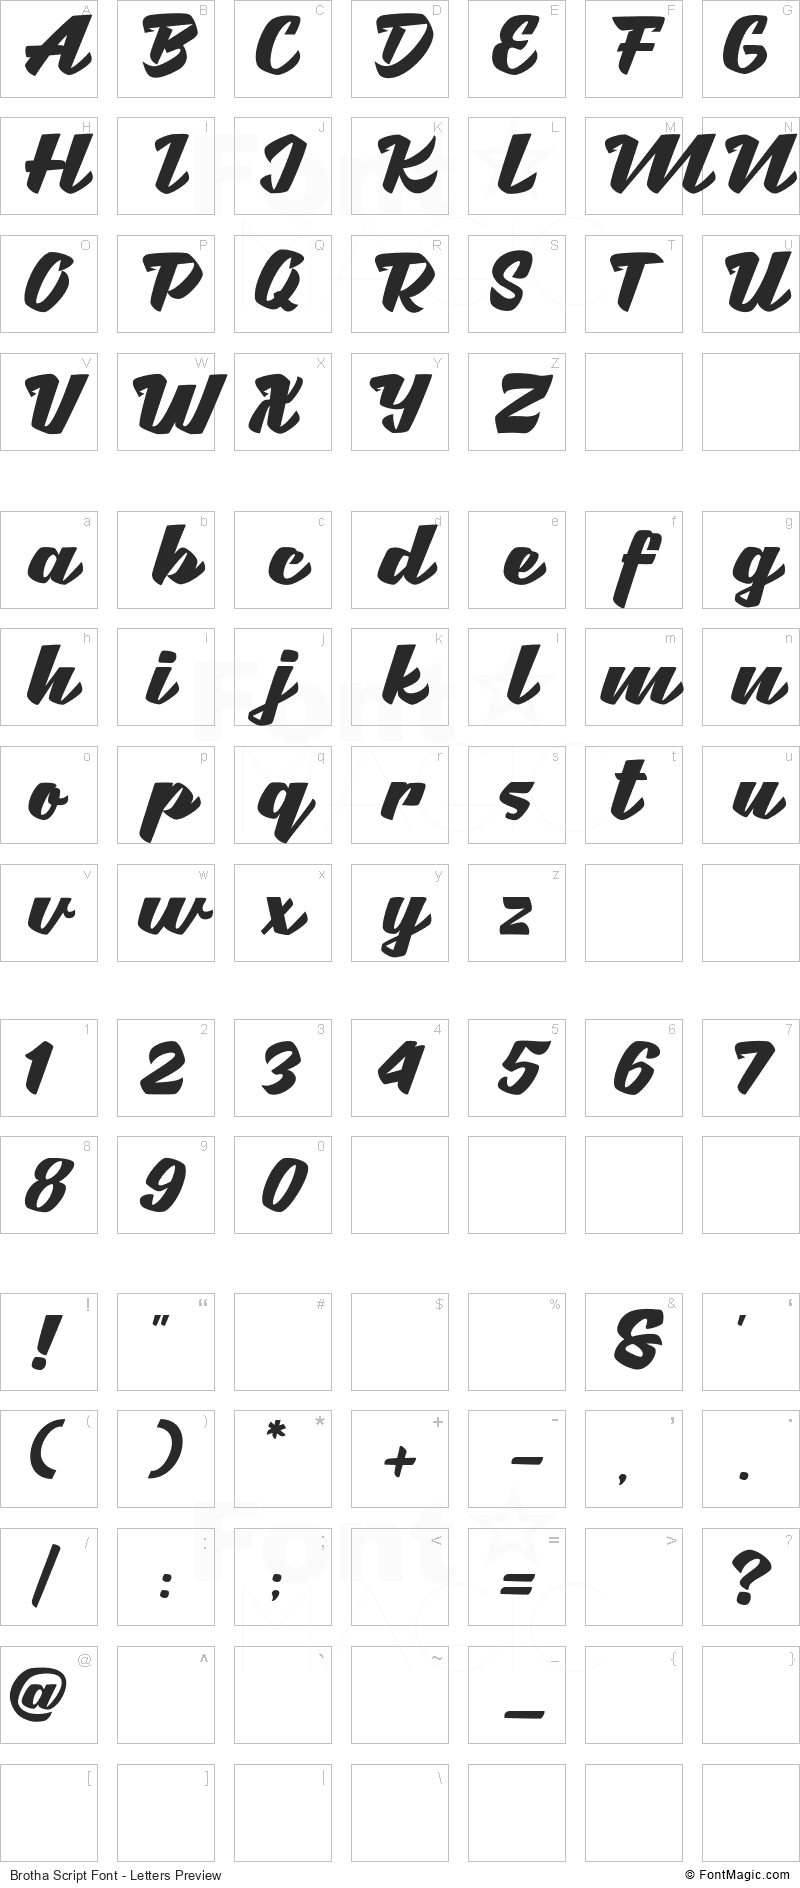 Brotha Script Font - All Latters Preview Chart